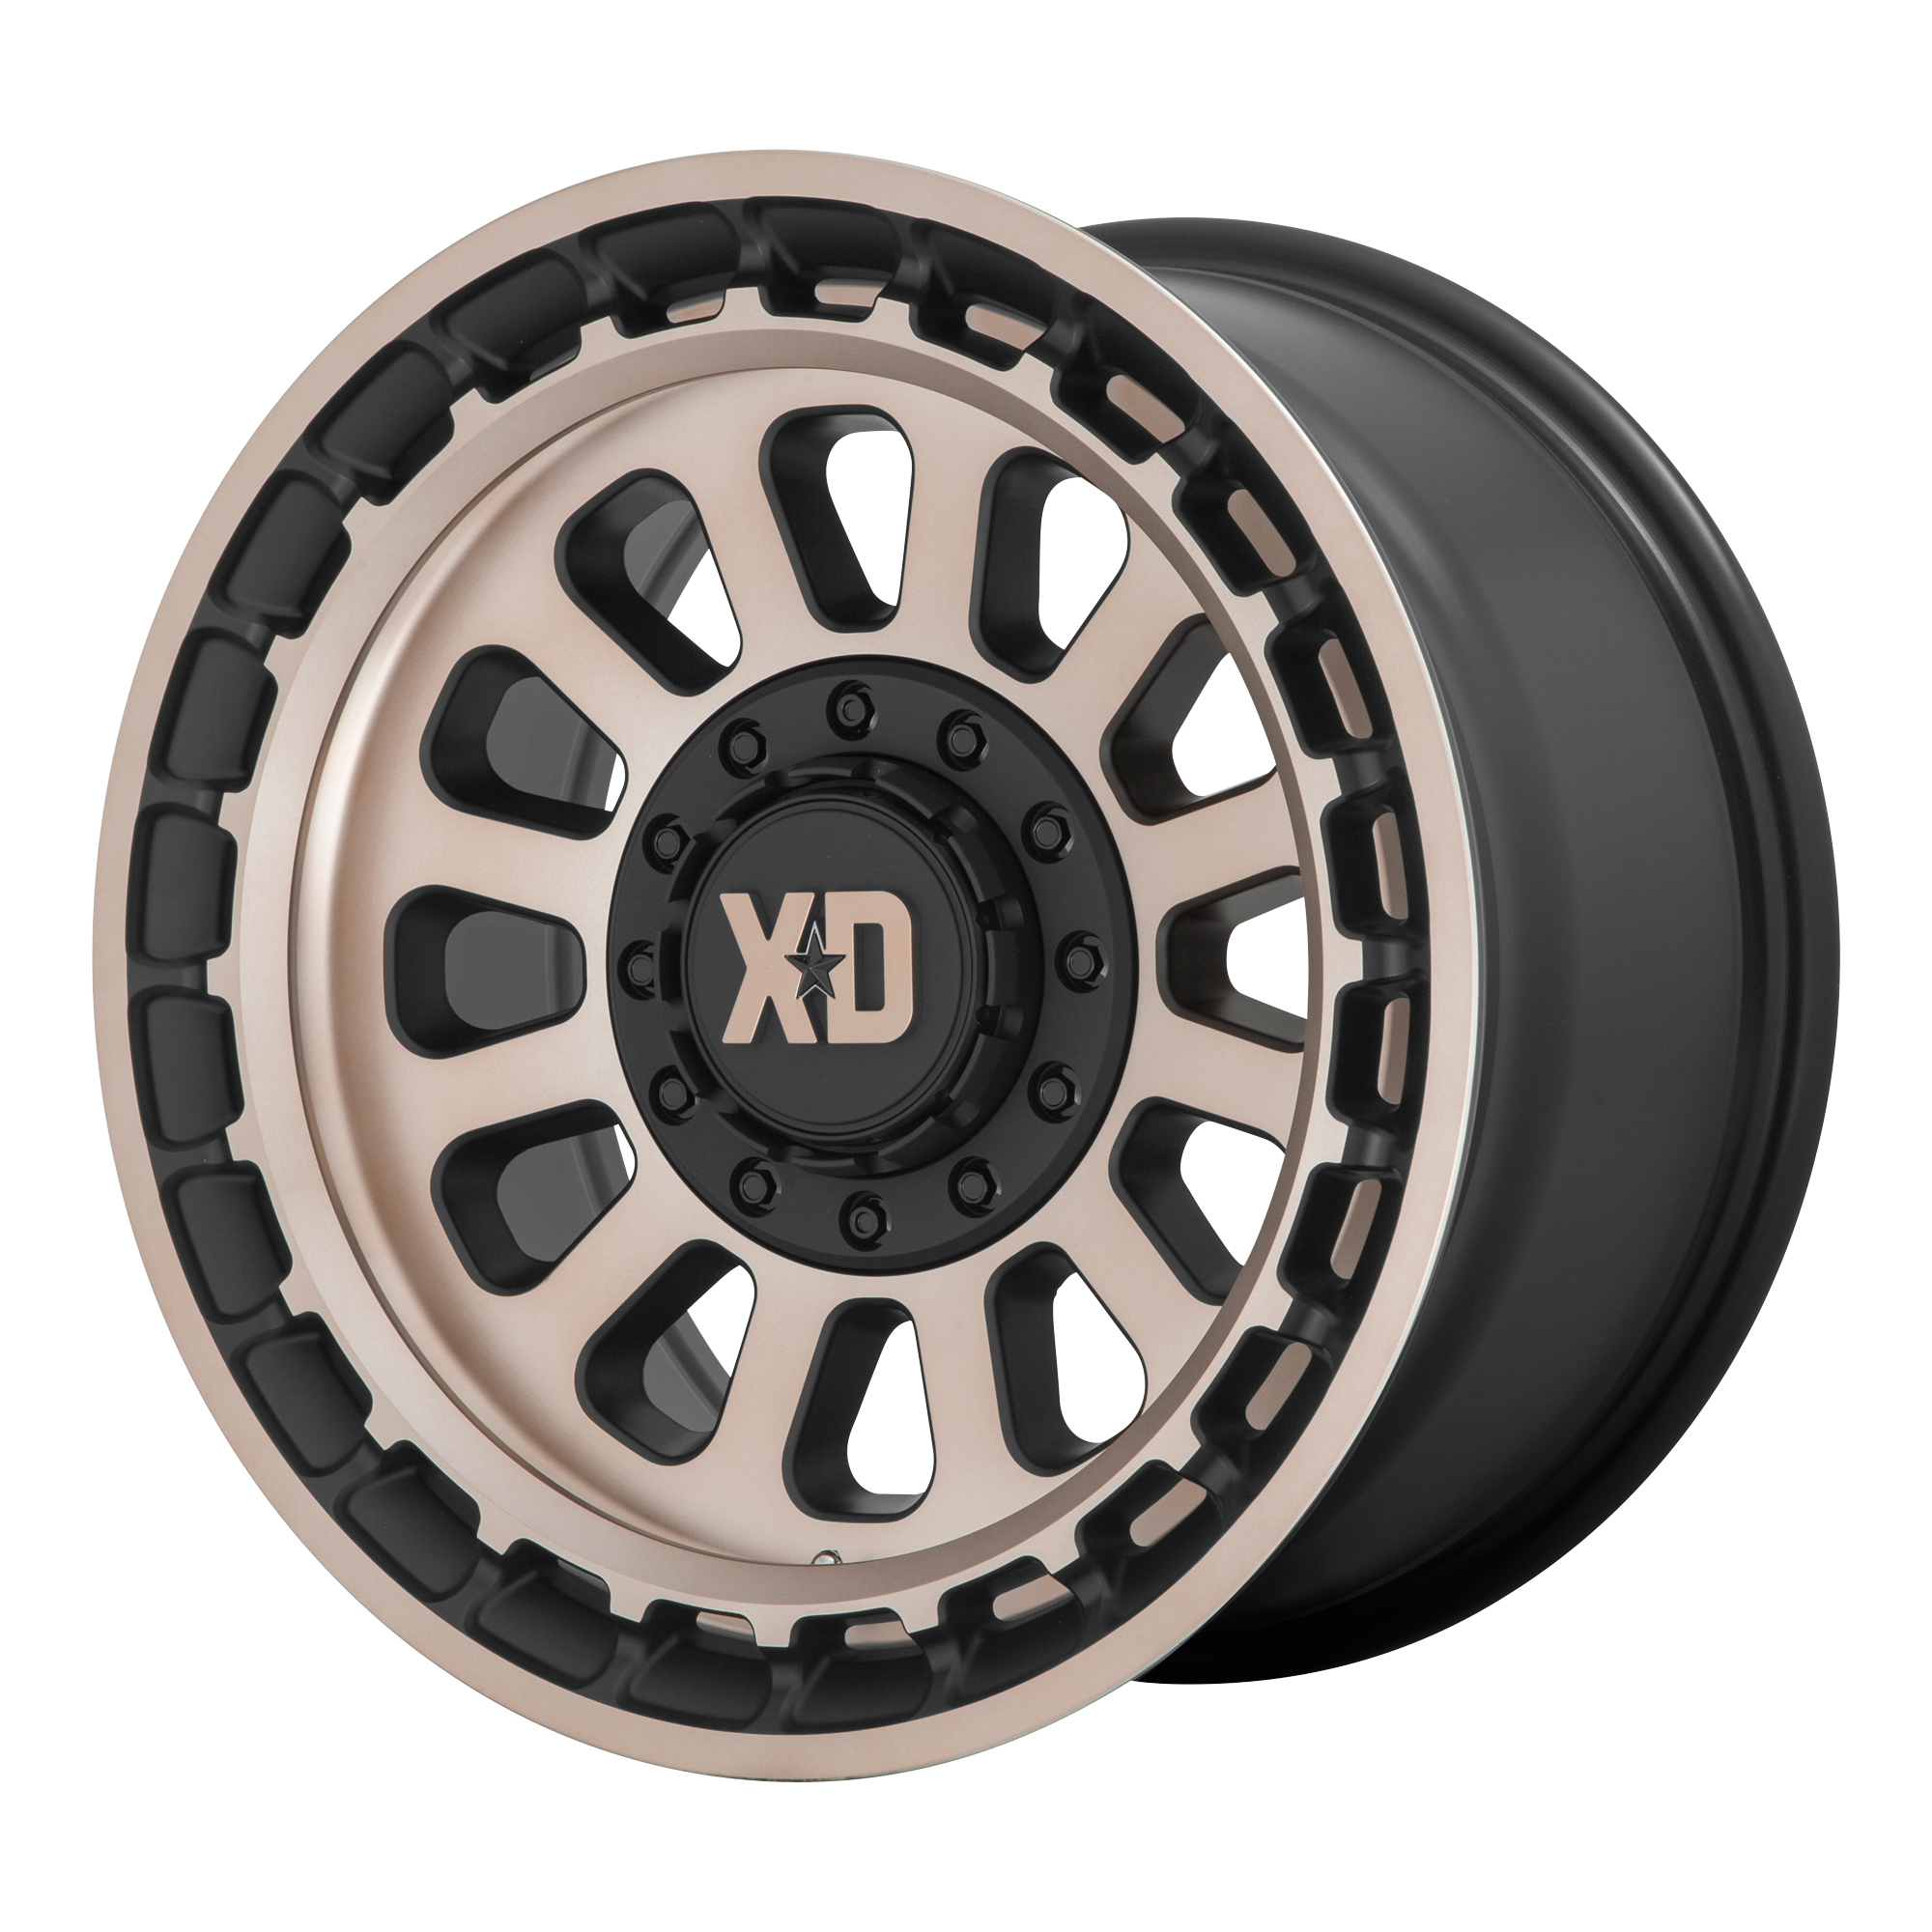 XD 20"x10" Non-Chrome Satin Black With Bronze Tint Custom Wheel ARSWCWXD85621035618N